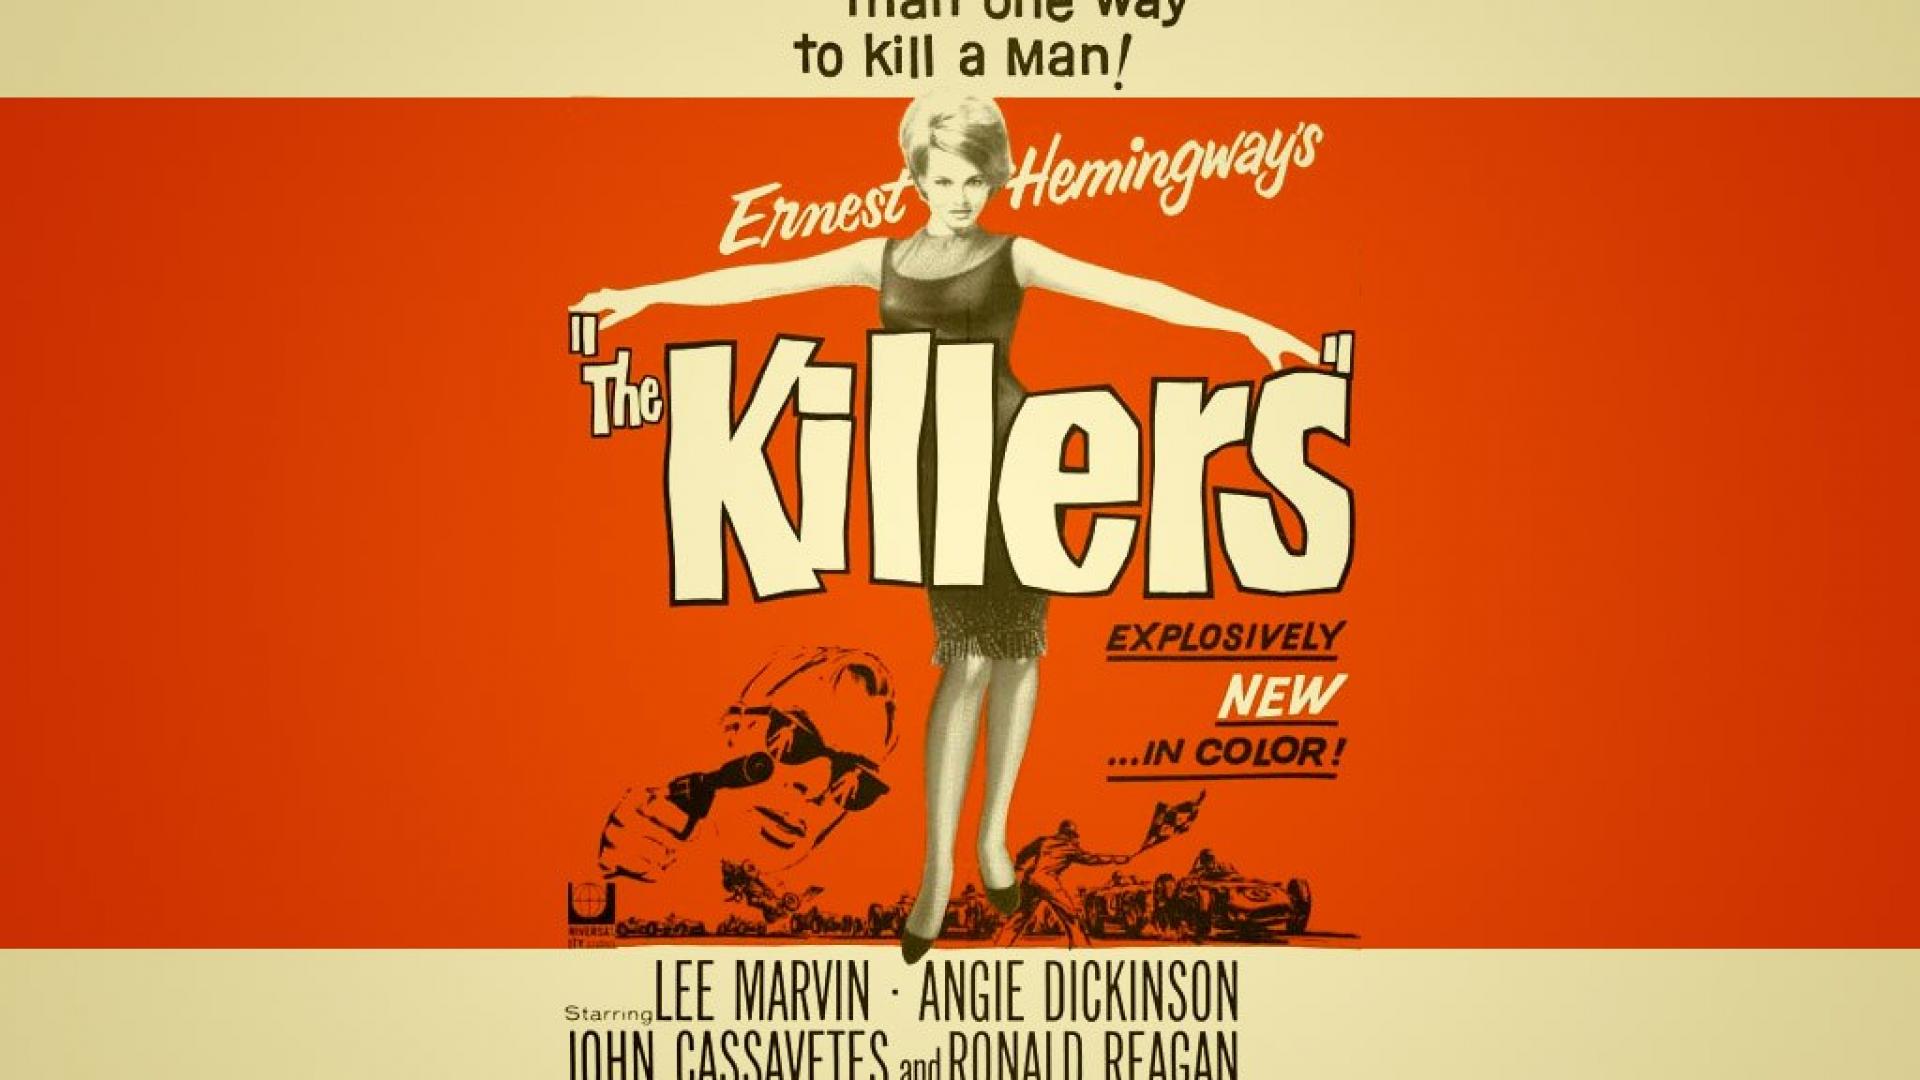 the killers poster hd wallpaper - (#2858) - HQ Desktop Wallpapers ...